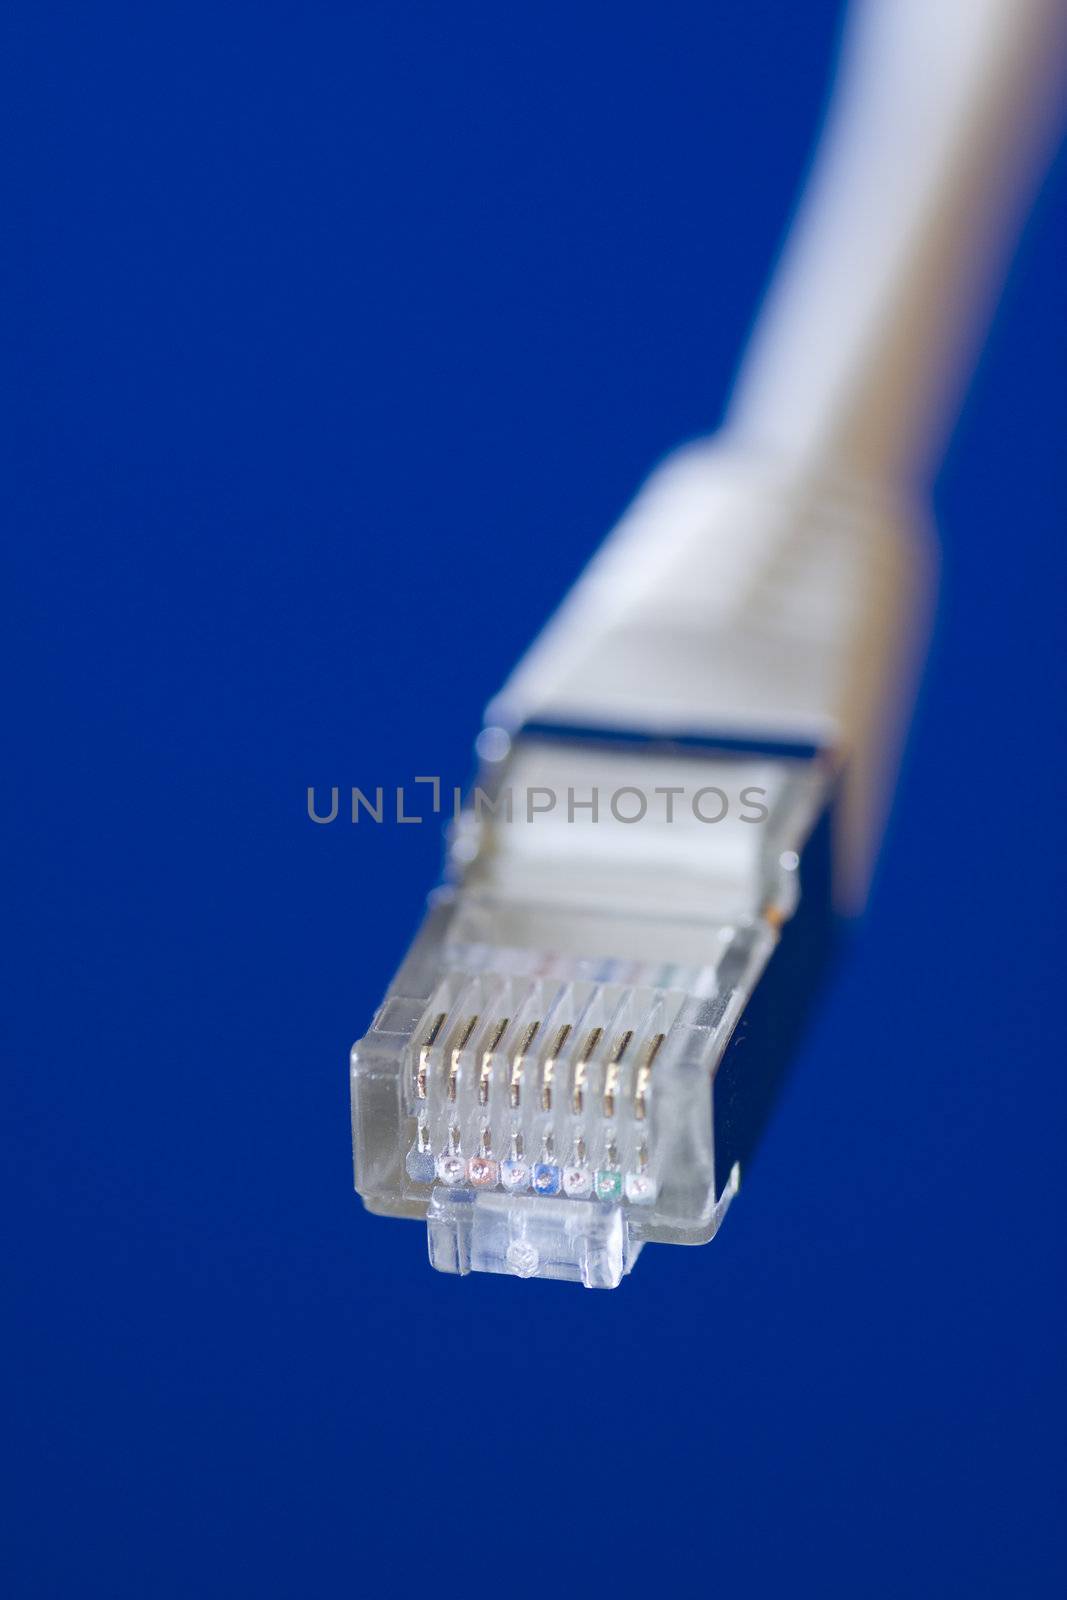 white utp cat5 network cableon blue background